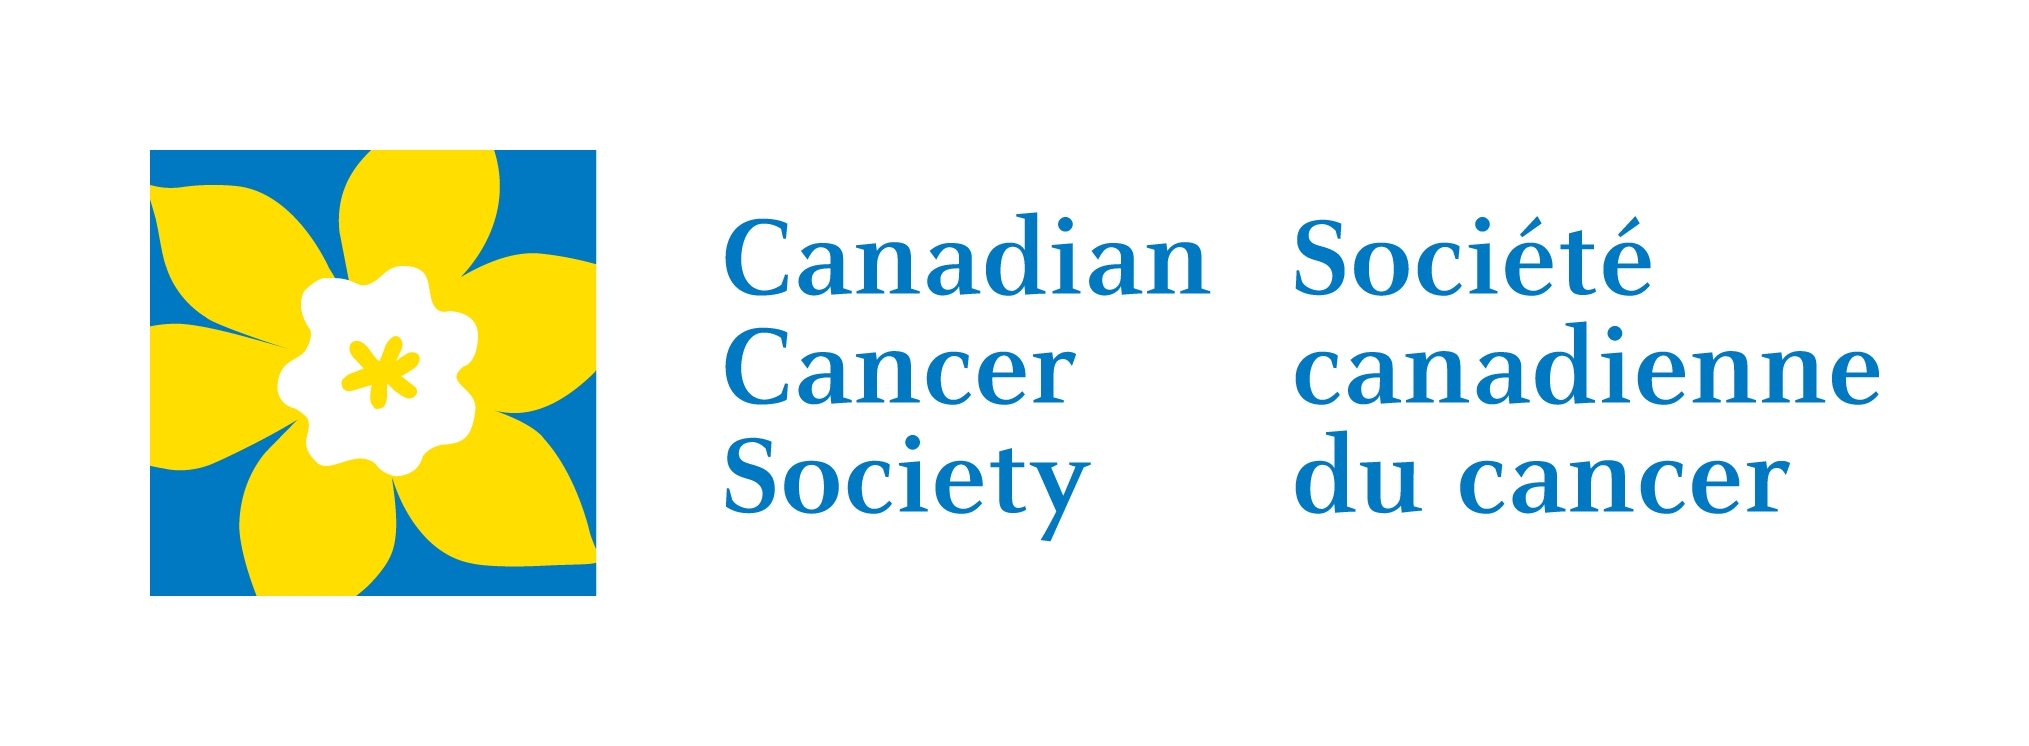 cnanadian cancer society logo